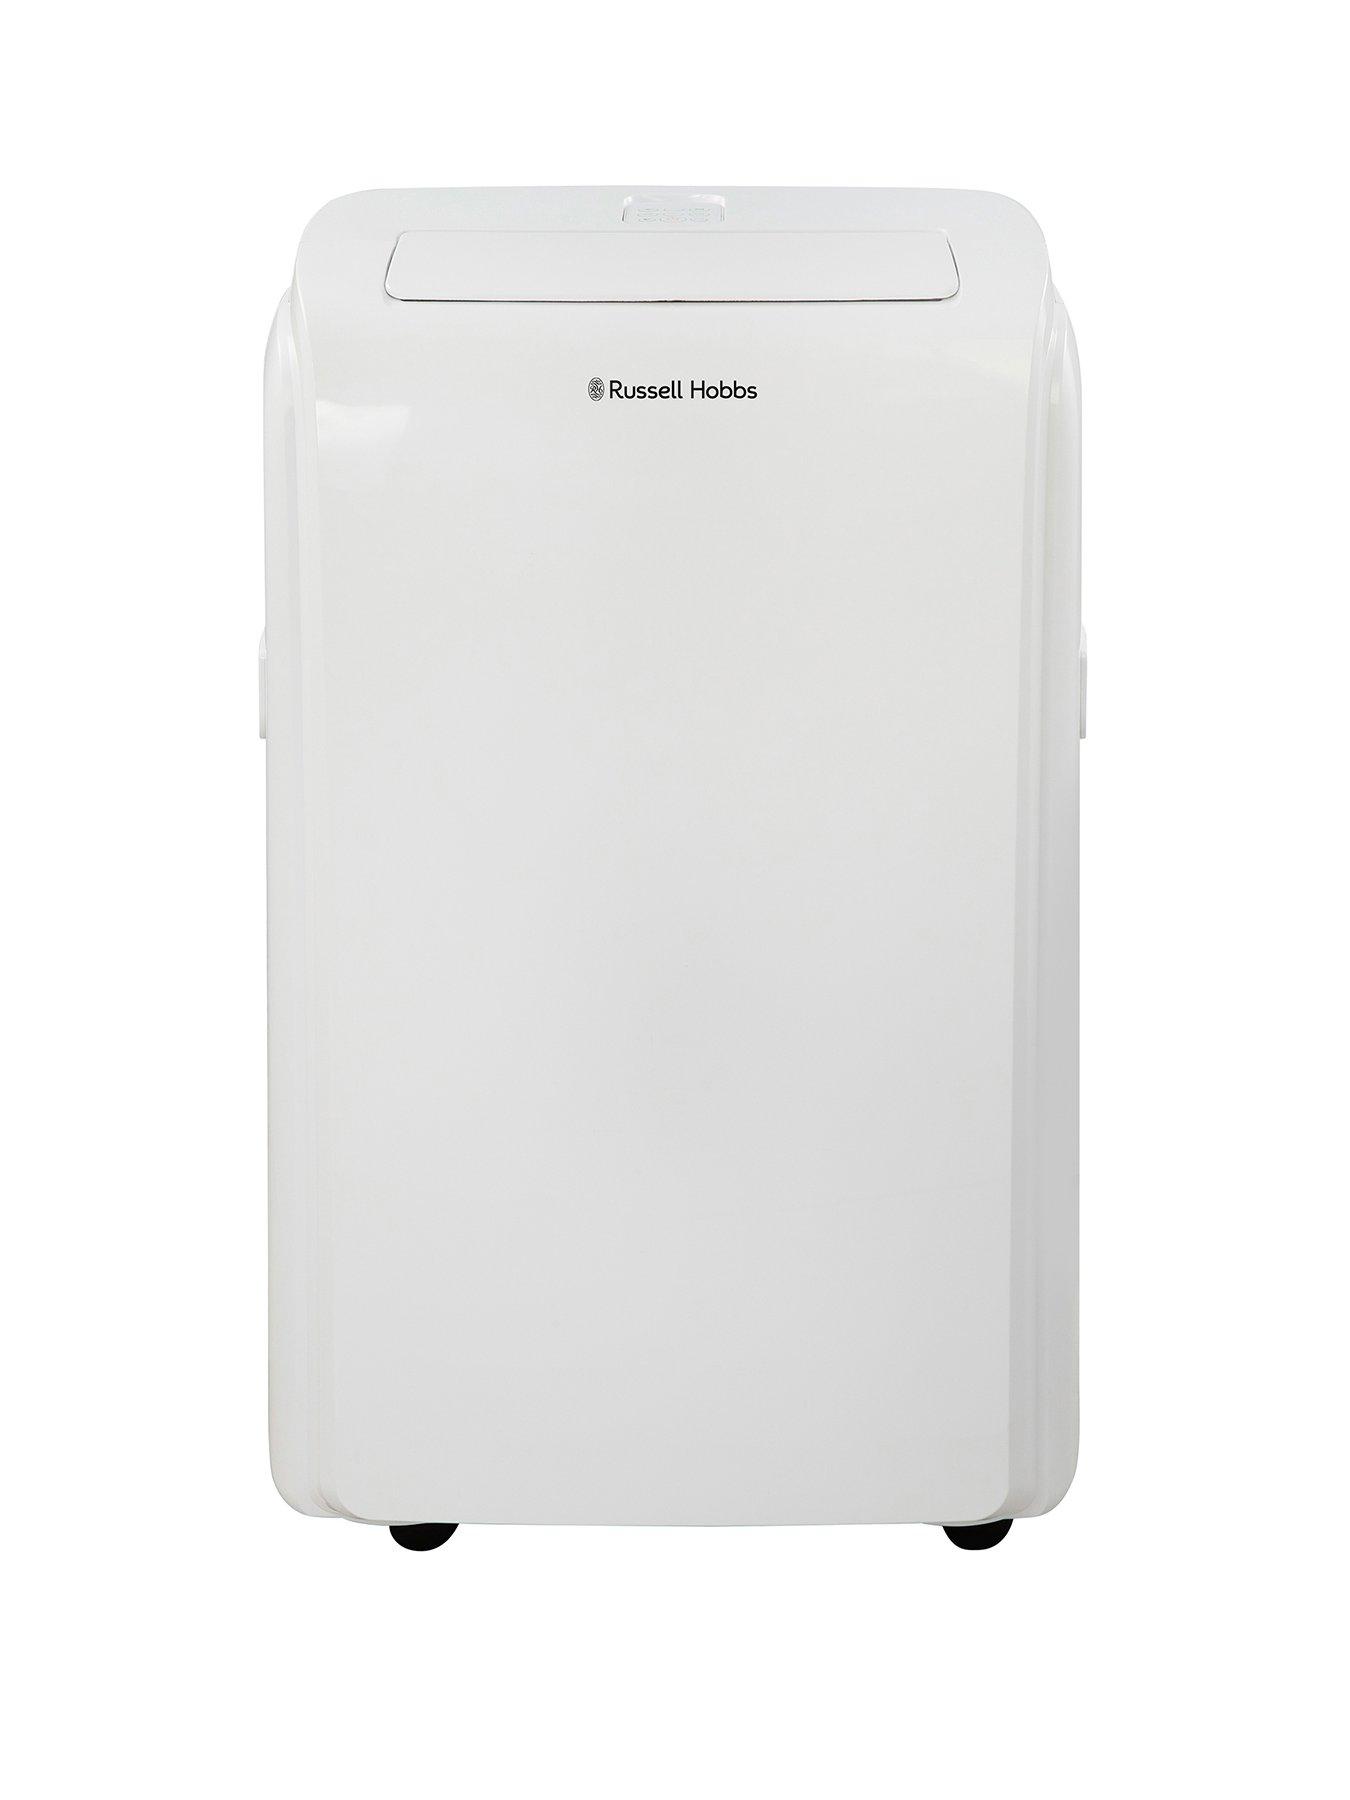 Russell Hobbs Rhpac11001 2-In-1 Portable Air Conditioner And Dehumidifier, 11000 Btu